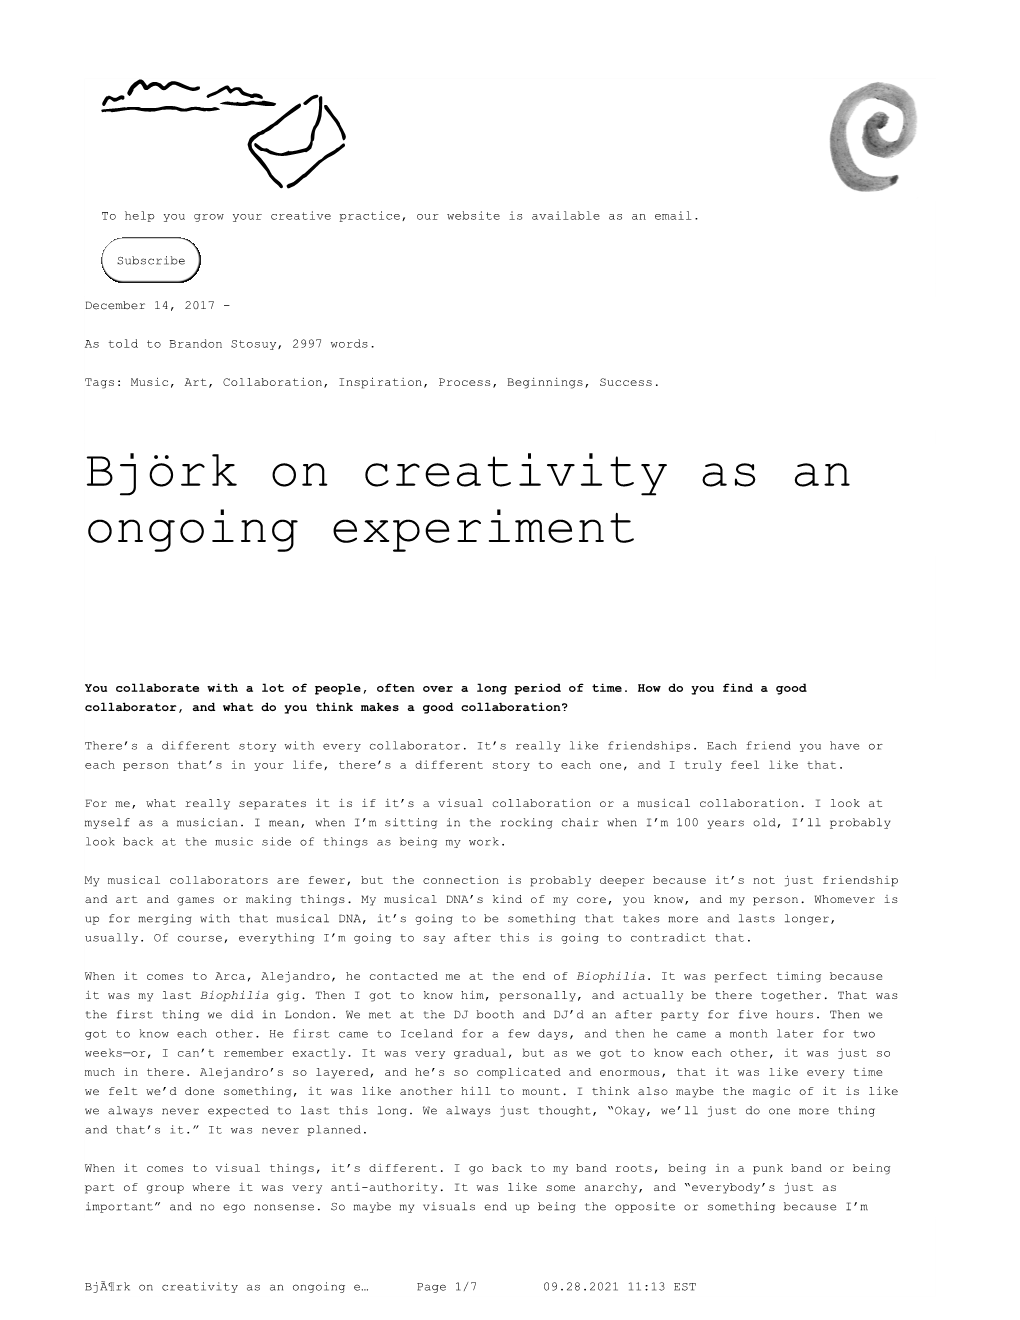 Björk on Creativity As an Ongoing Experiment